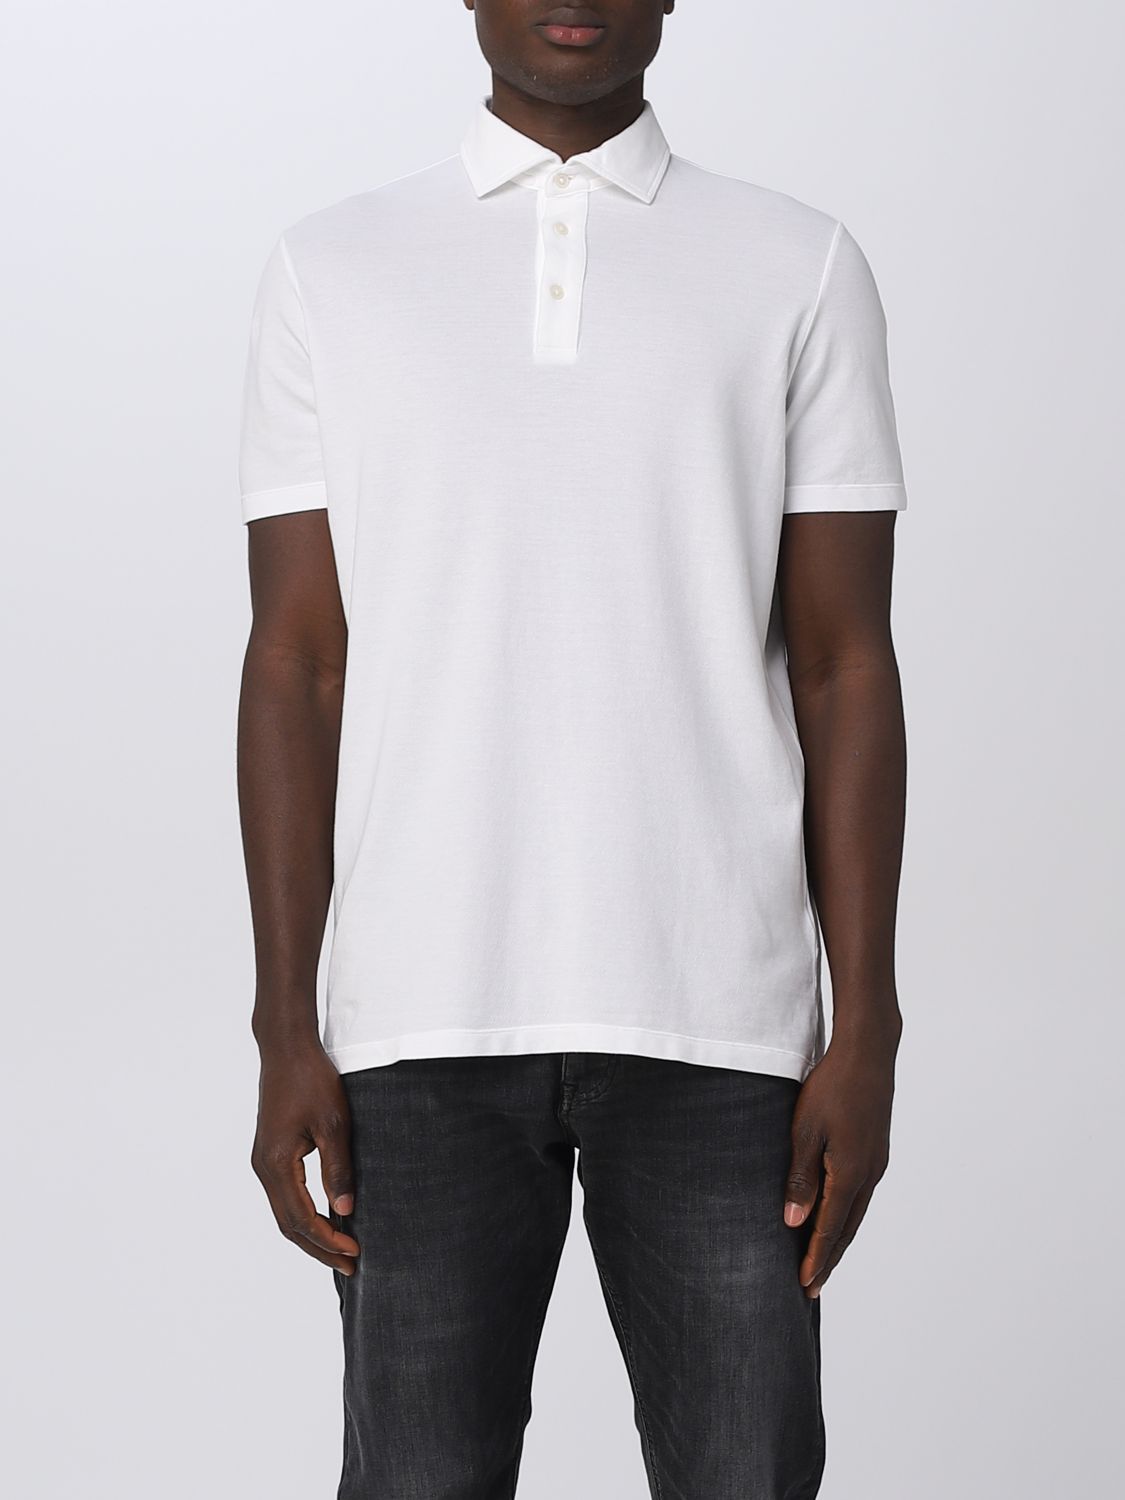 Altea Men's White Cotton Polo Shirt